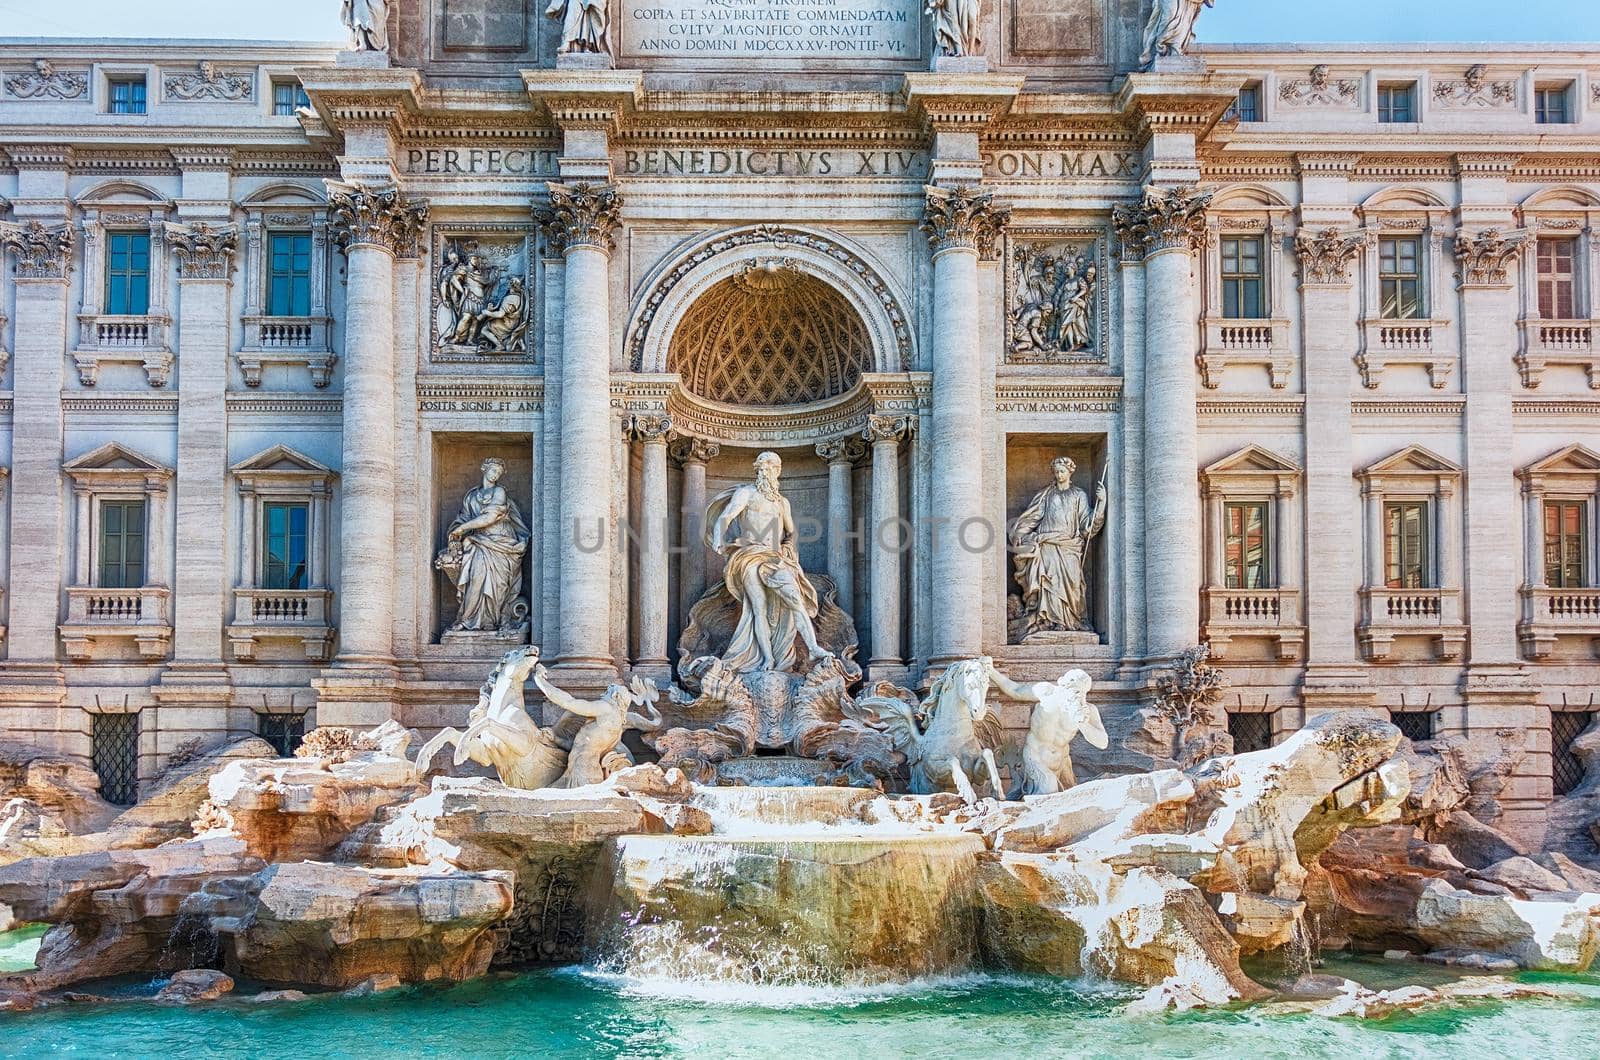 Trevi Fountain, iconic landmark in the centre of Rome, Italy by marcorubino